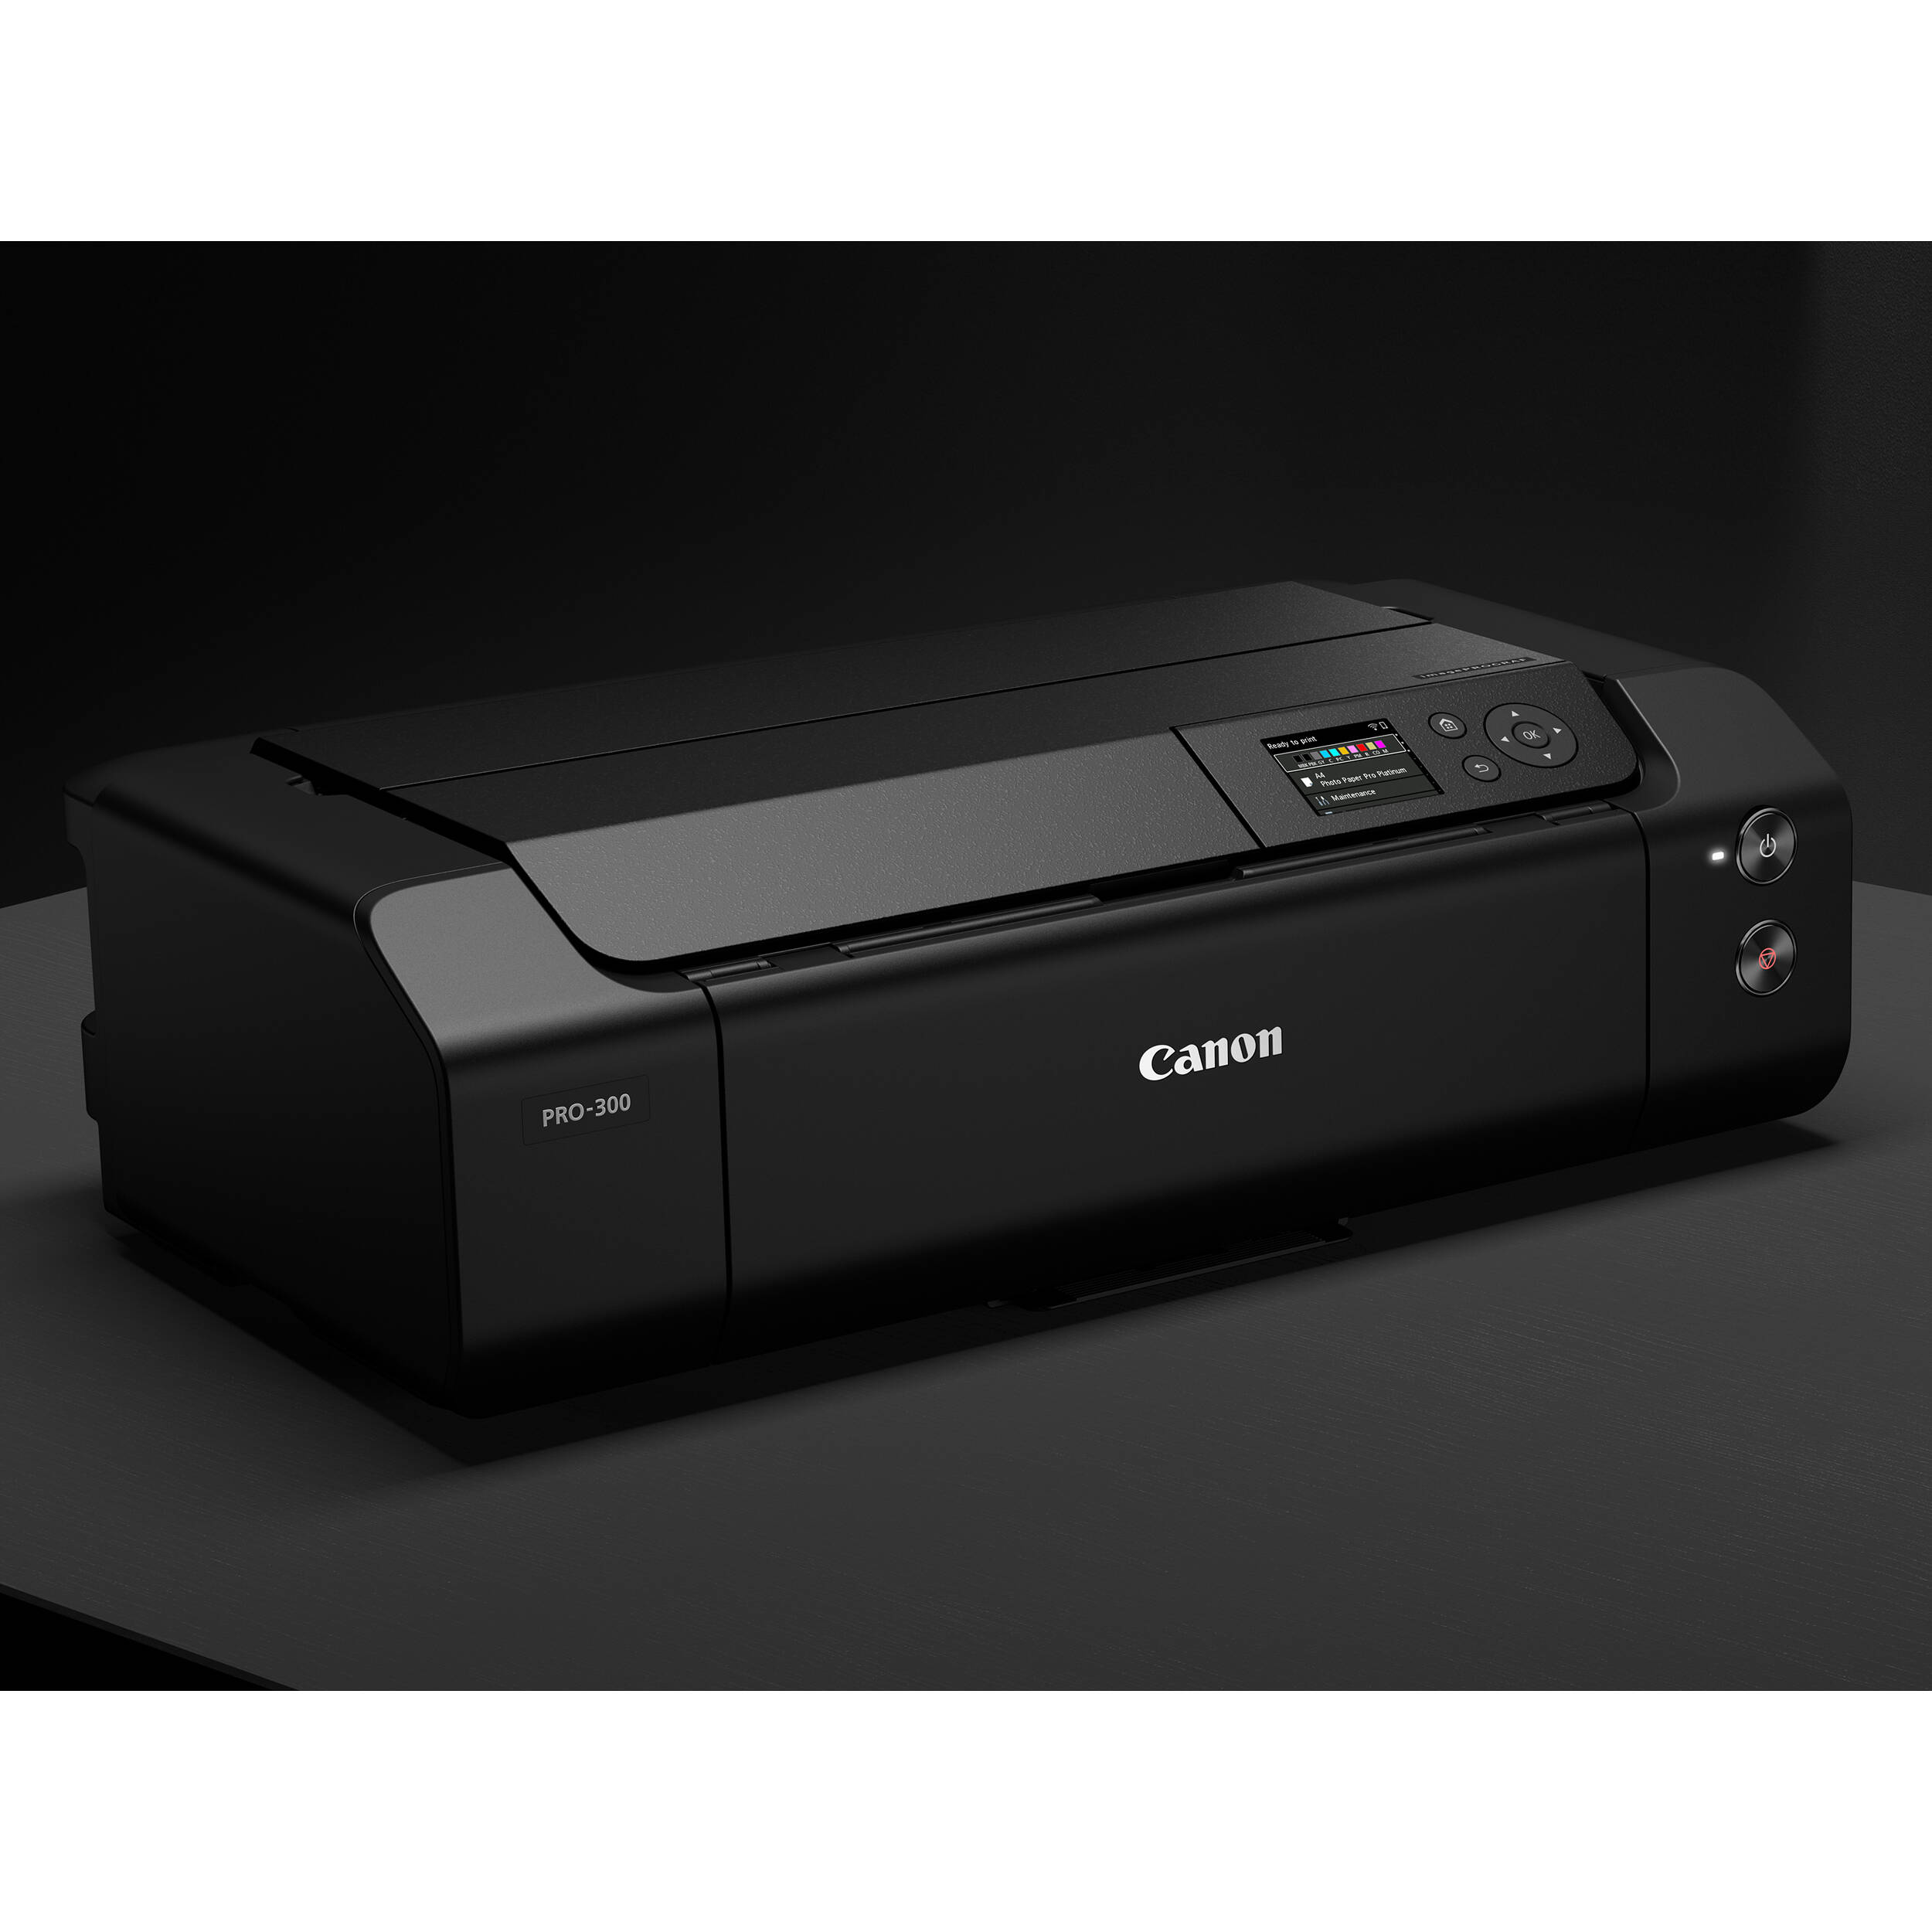 Canon ImagePROGRAF PRO 300 Printer